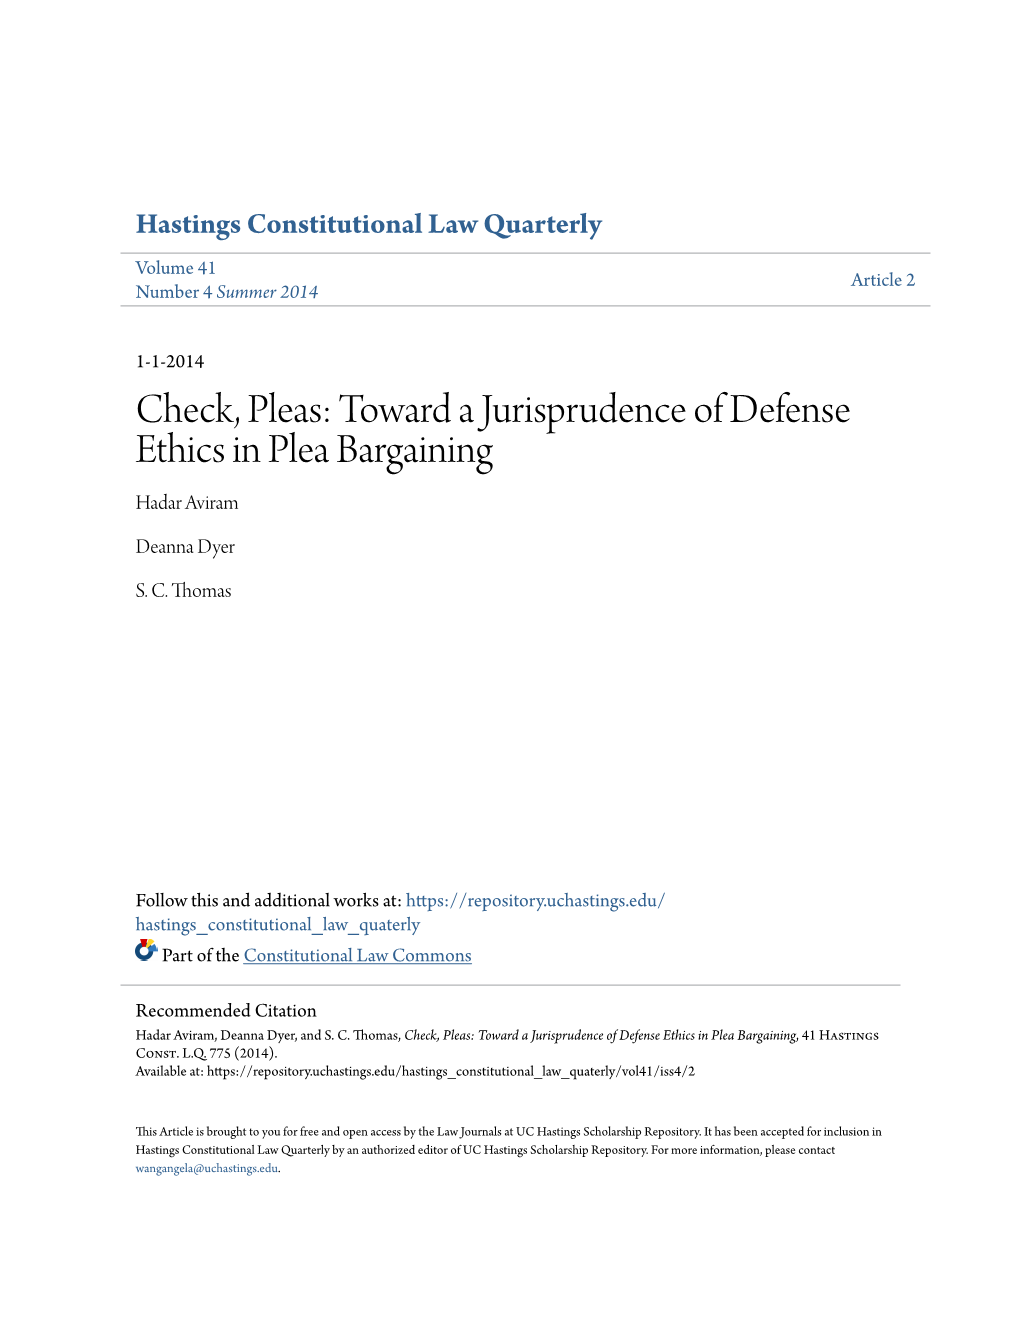 Toward a Jurisprudence of Defense Ethics in Plea Bargaining Hadar Aviram